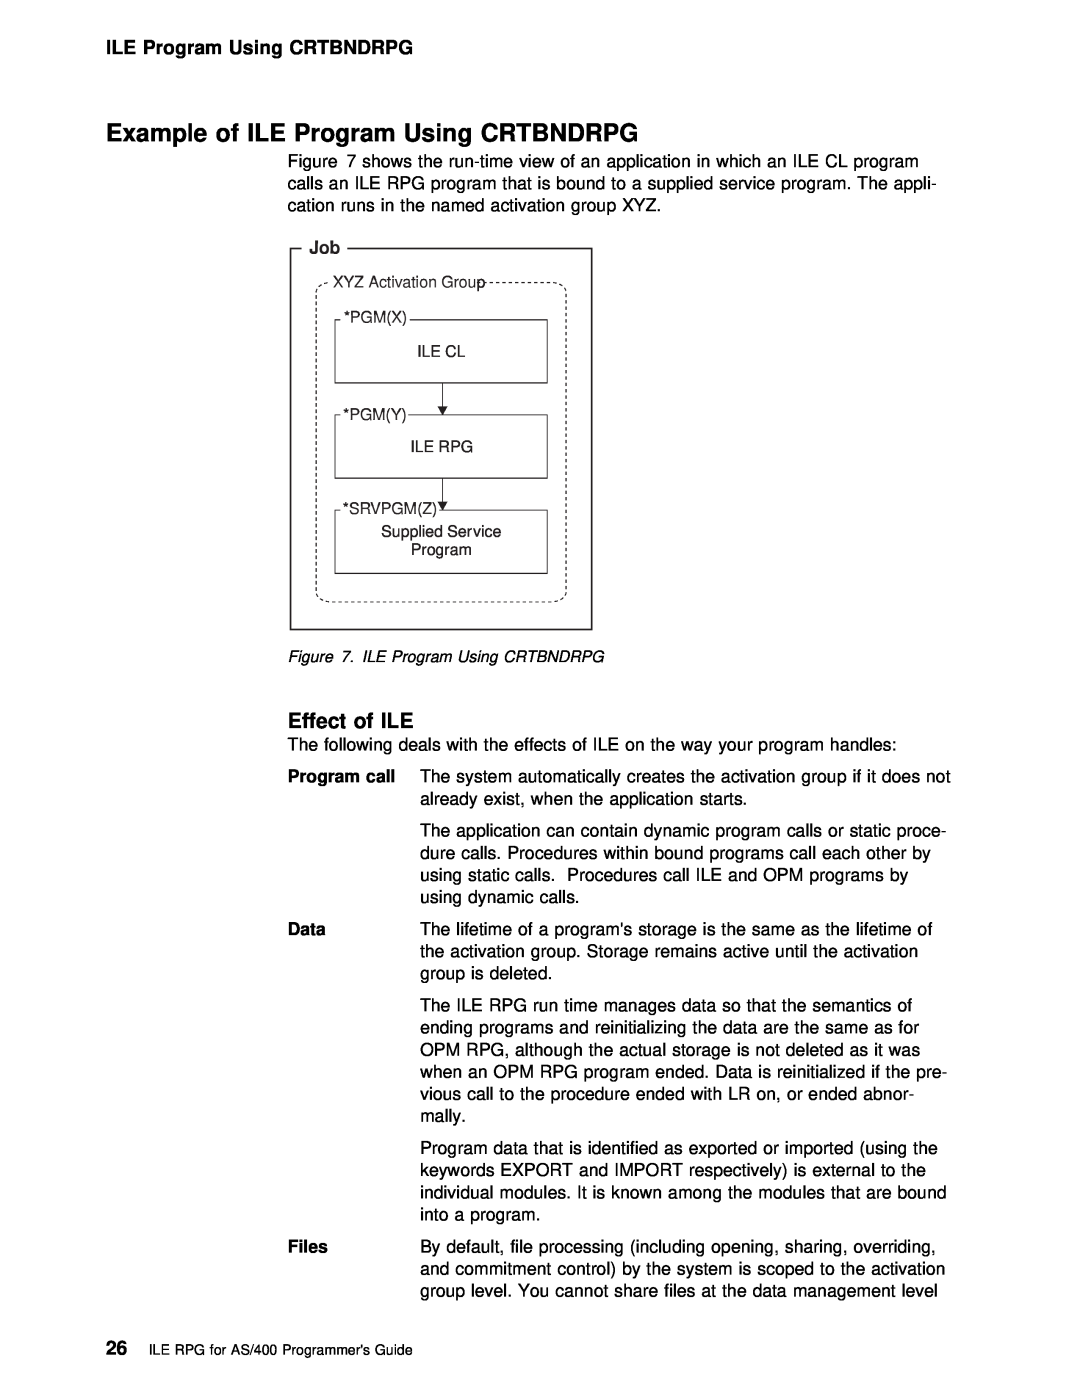 IBM AS/400 manual Example of ILE Program, Effect of ILE, ILE Program Using CRTBNDRPG, Crtbndrpg 